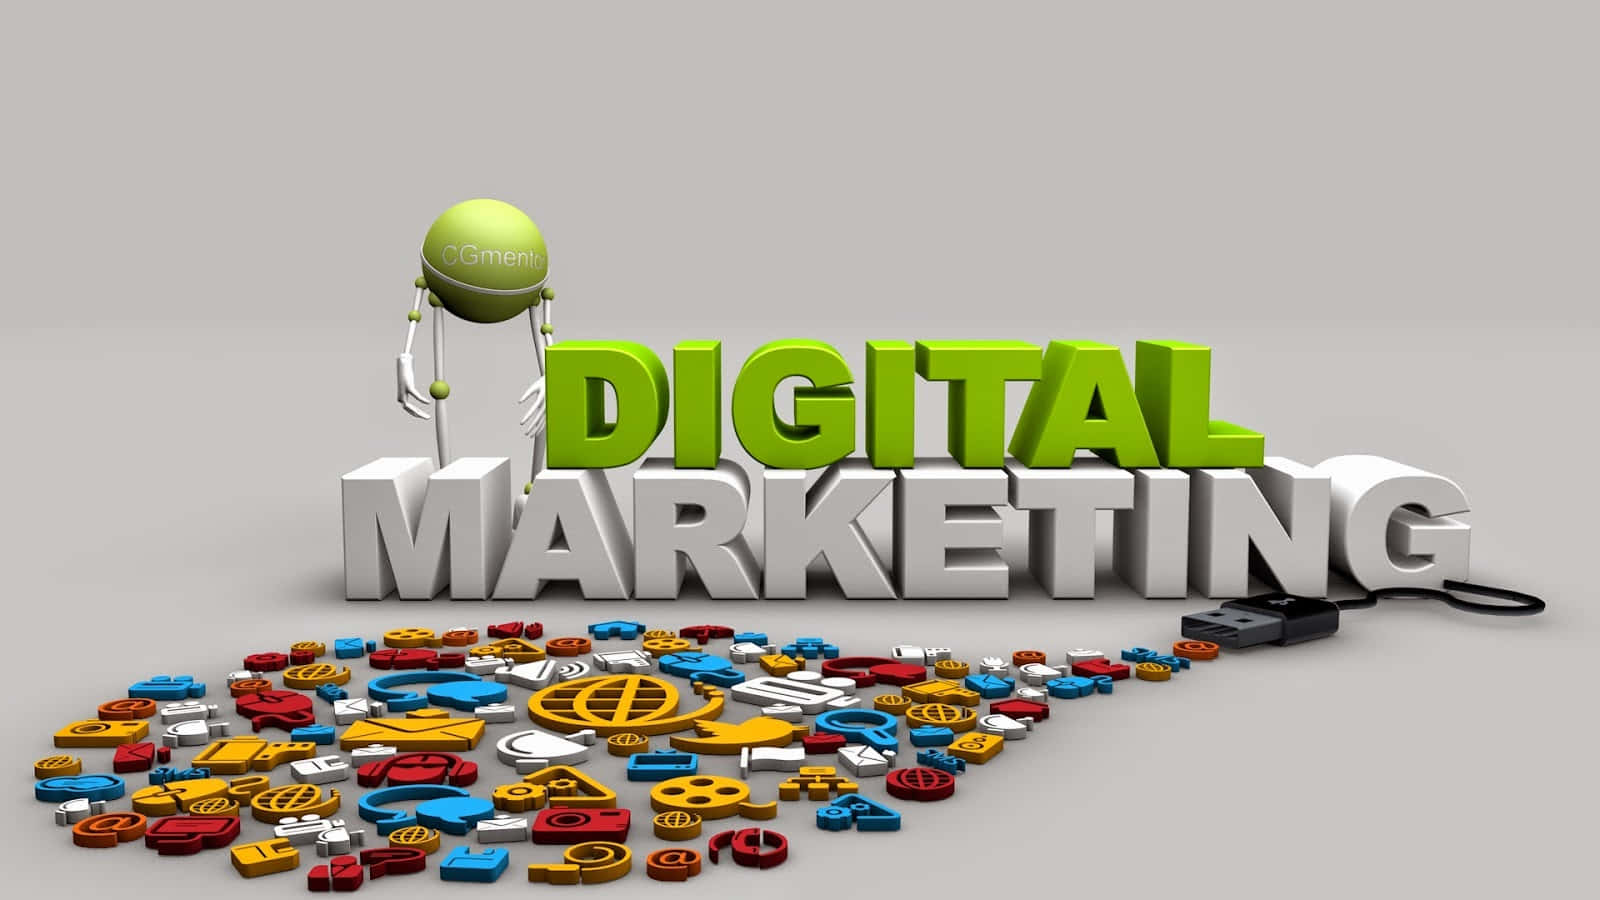 Digital Marketing - What Is It? Wallpaper